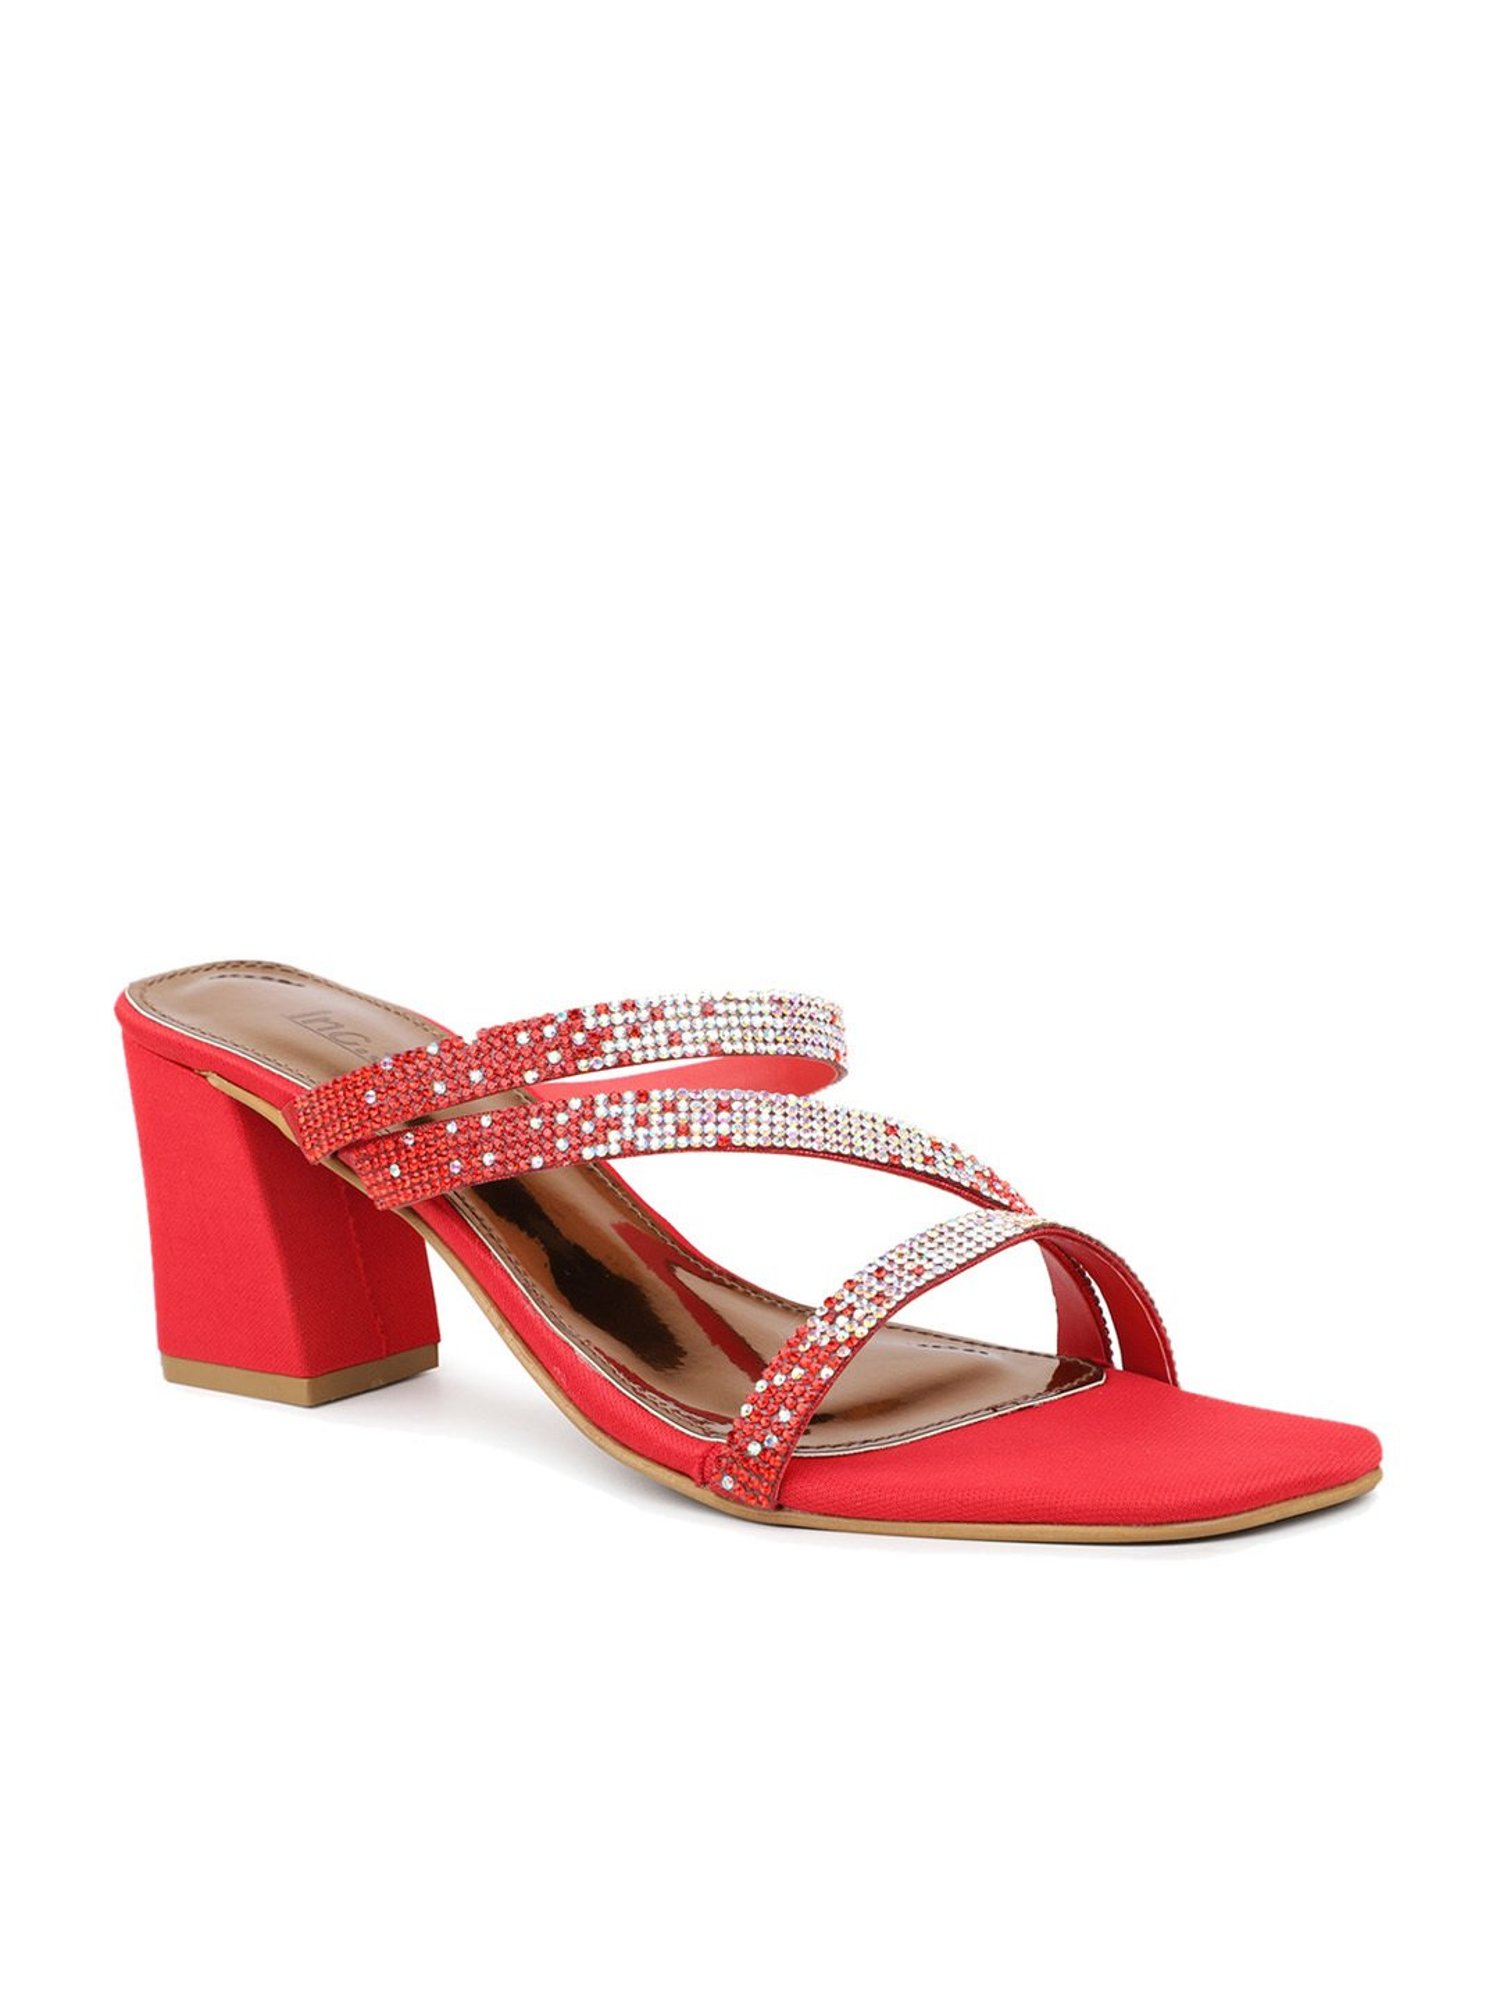 Bellla Women's Red Heeled Sandals | Aldo Shoes